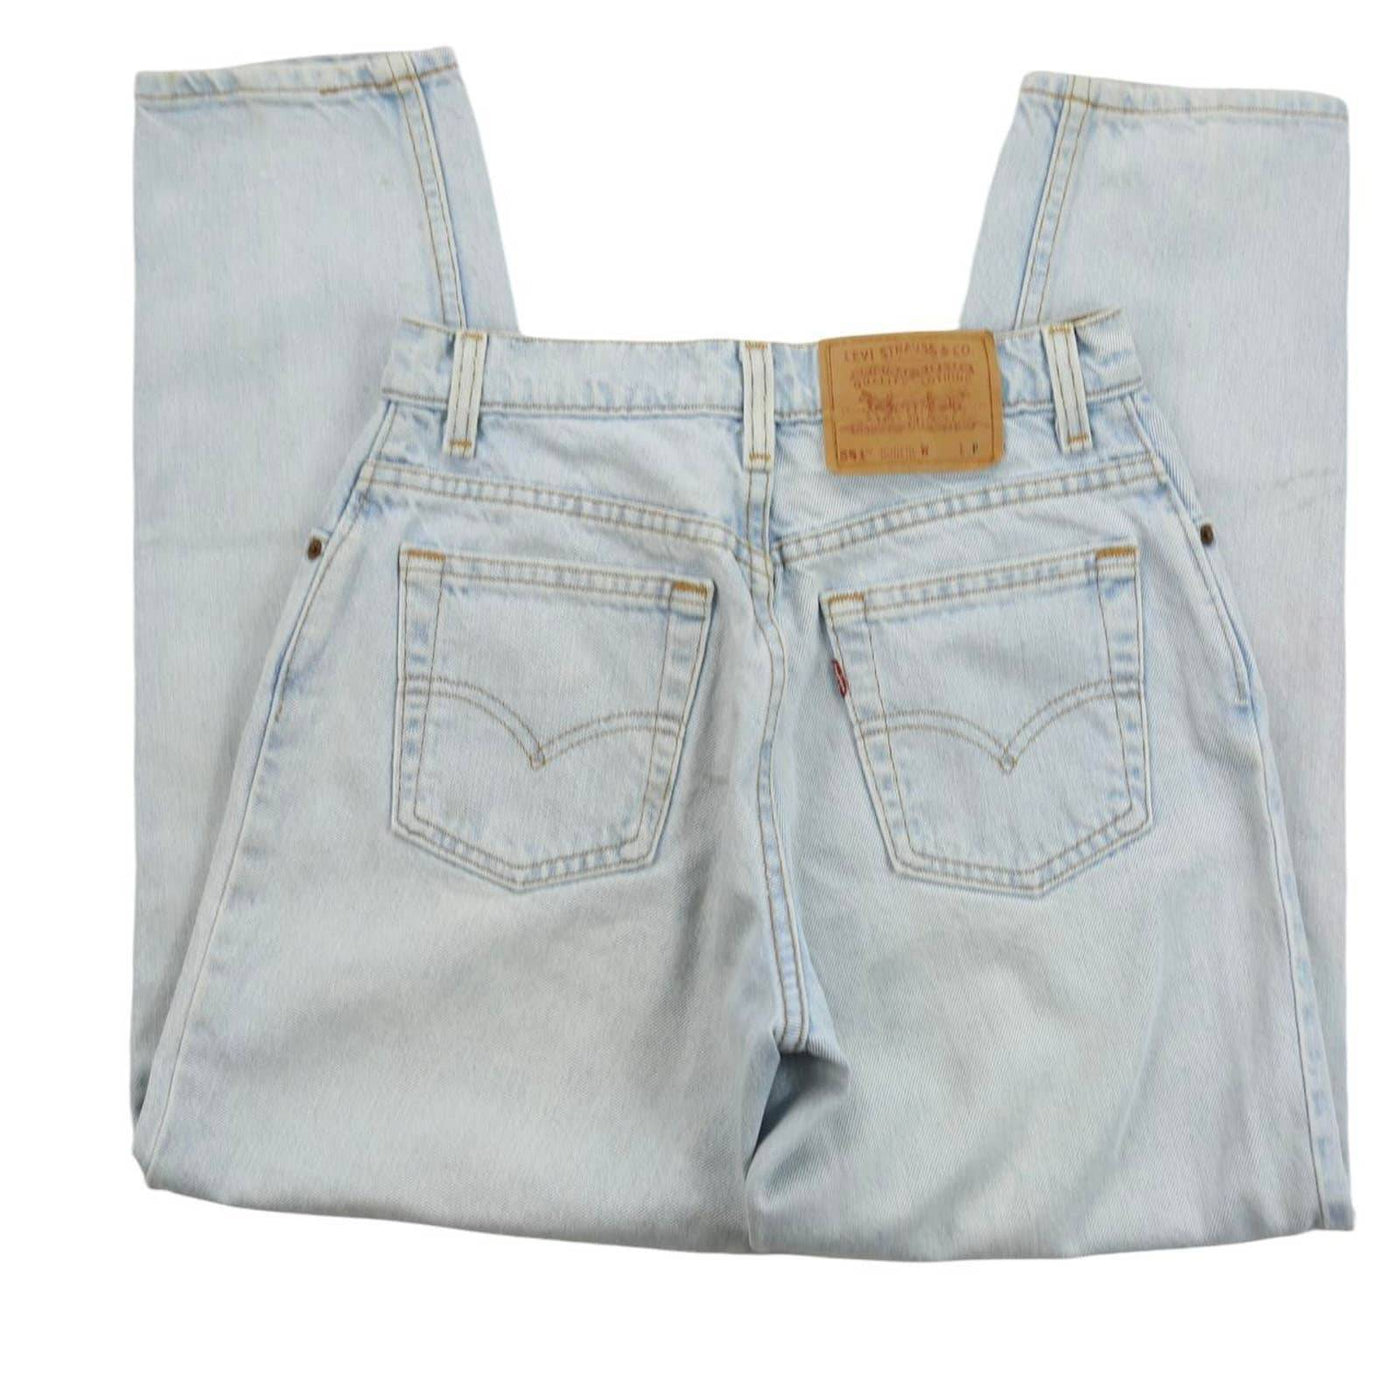 Vintage Levi’s 551 Light Wash High Waisted Jeans